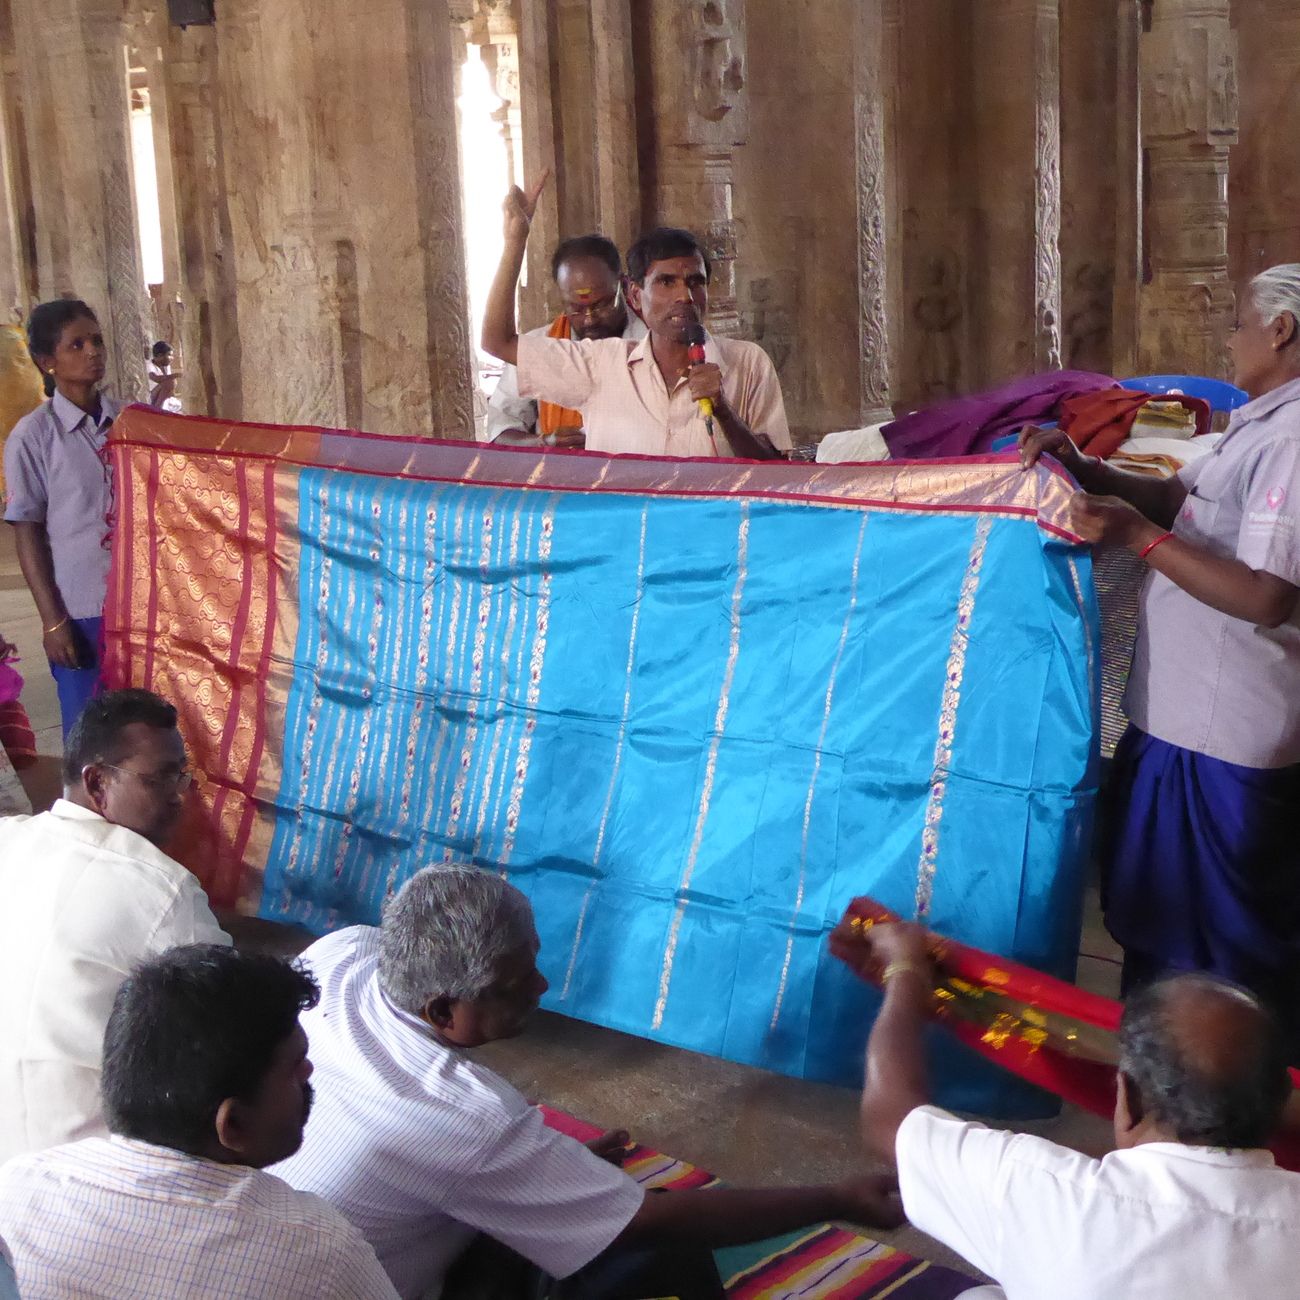 Sari auction in the Temple